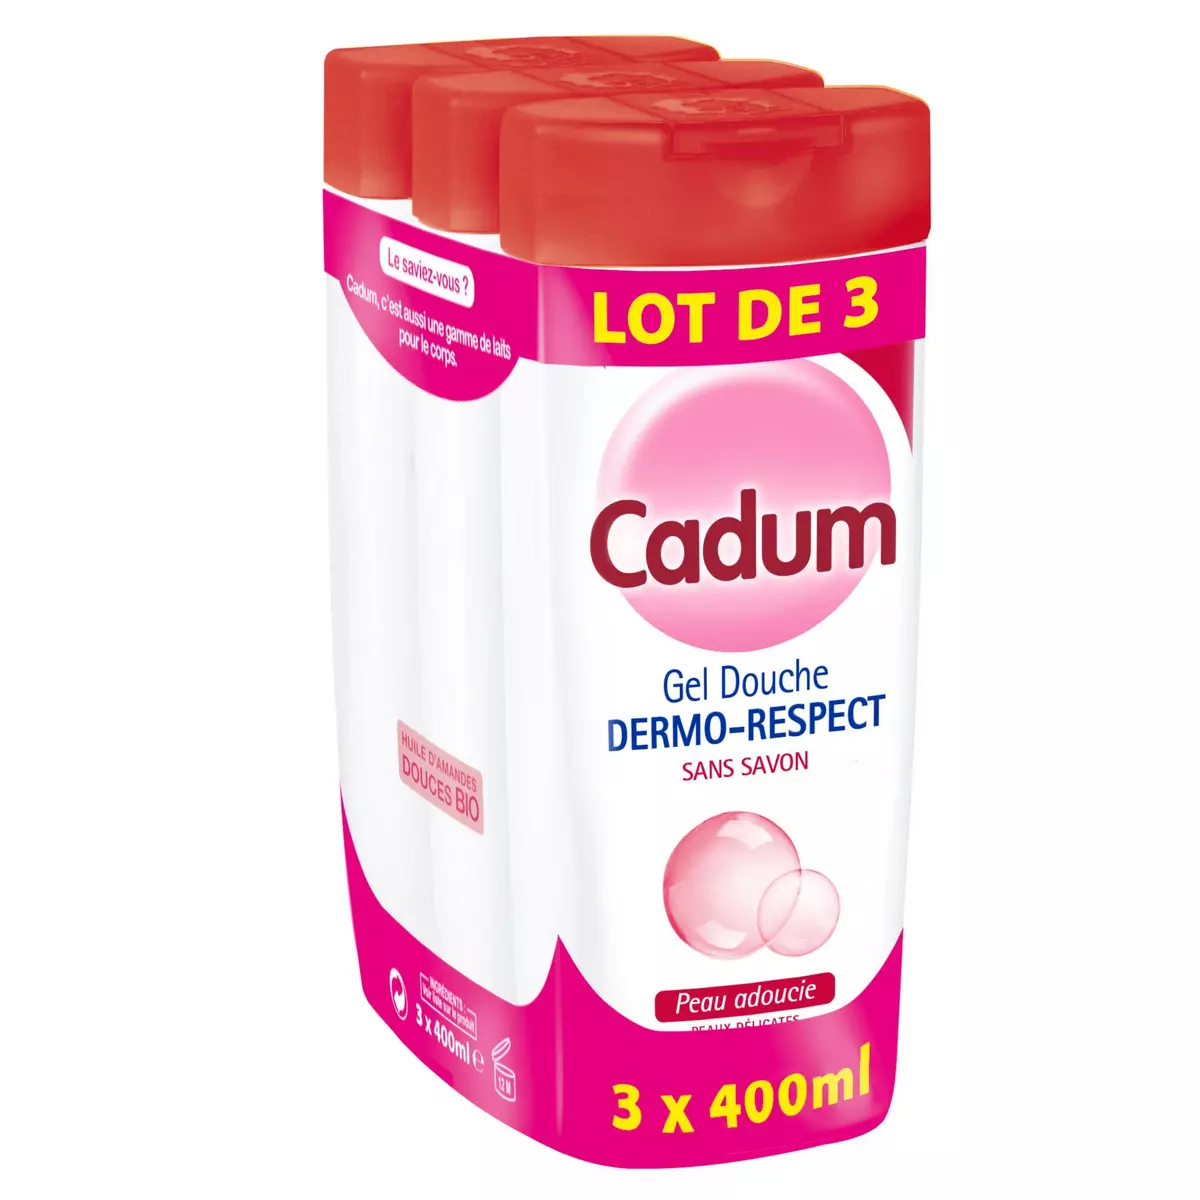 CADUM Gel douche dermo-respect sans savon peau adoucie 3x400ml